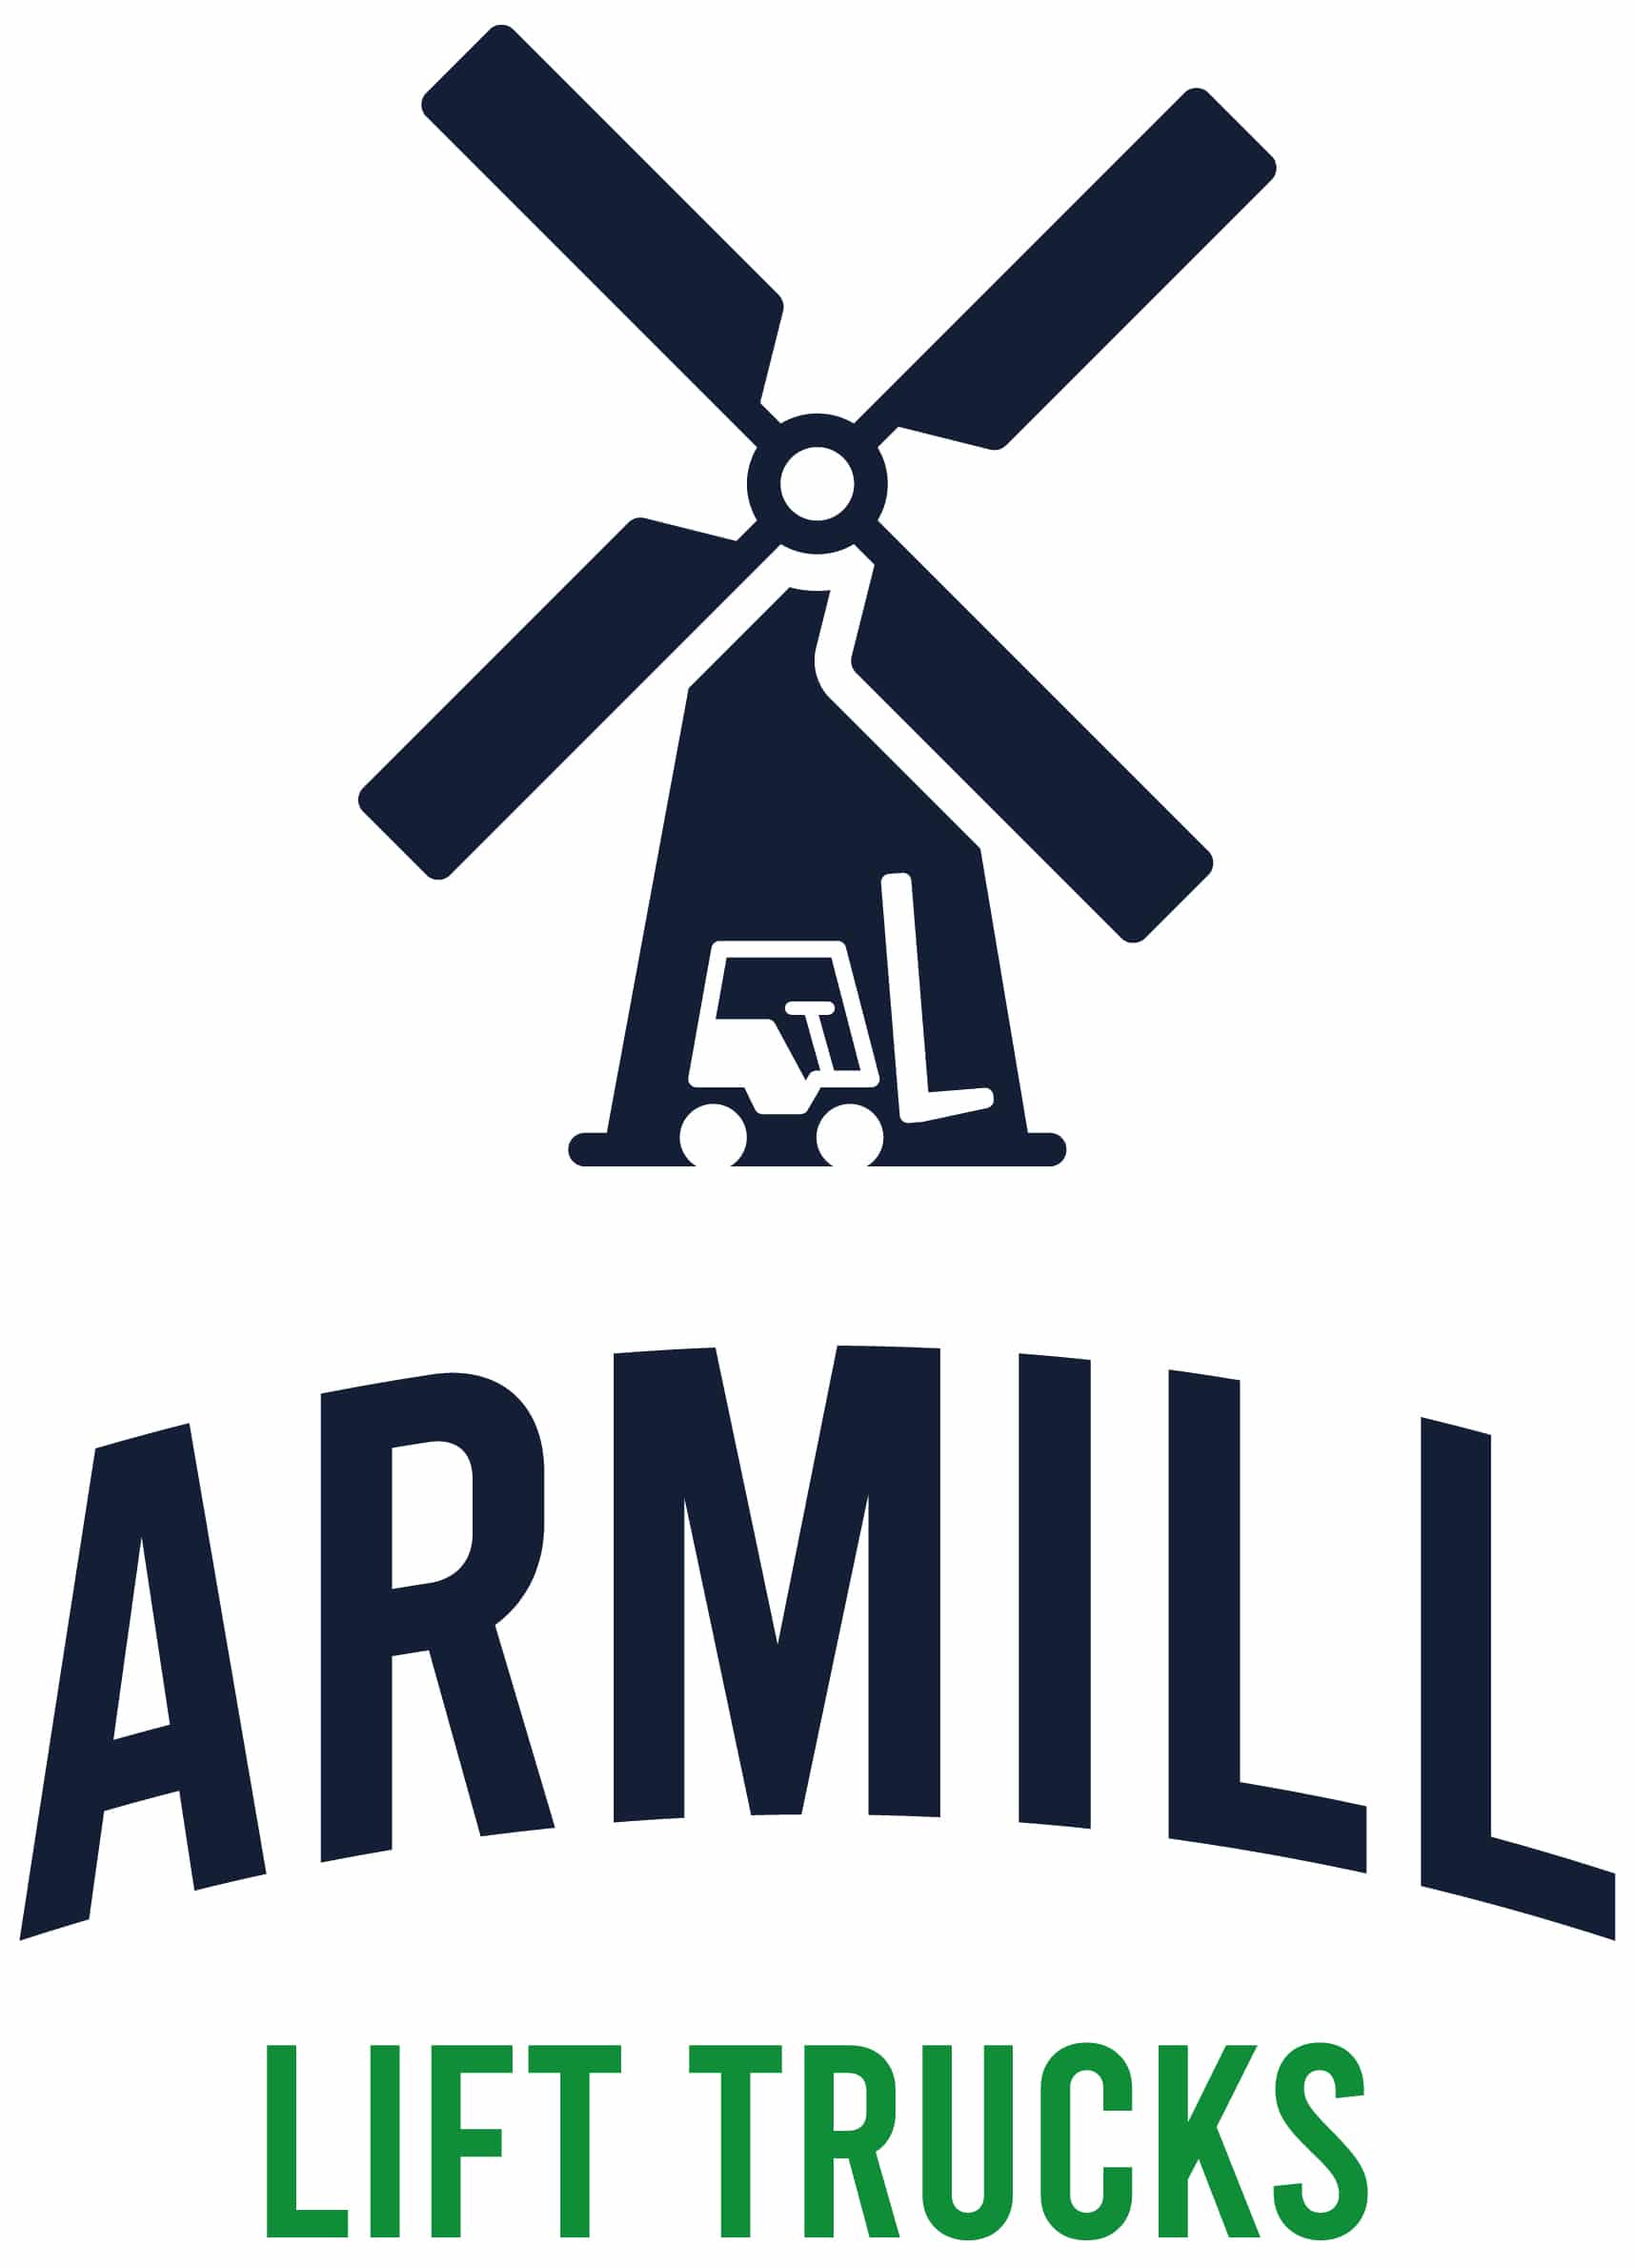 Armill Lift Truck logo